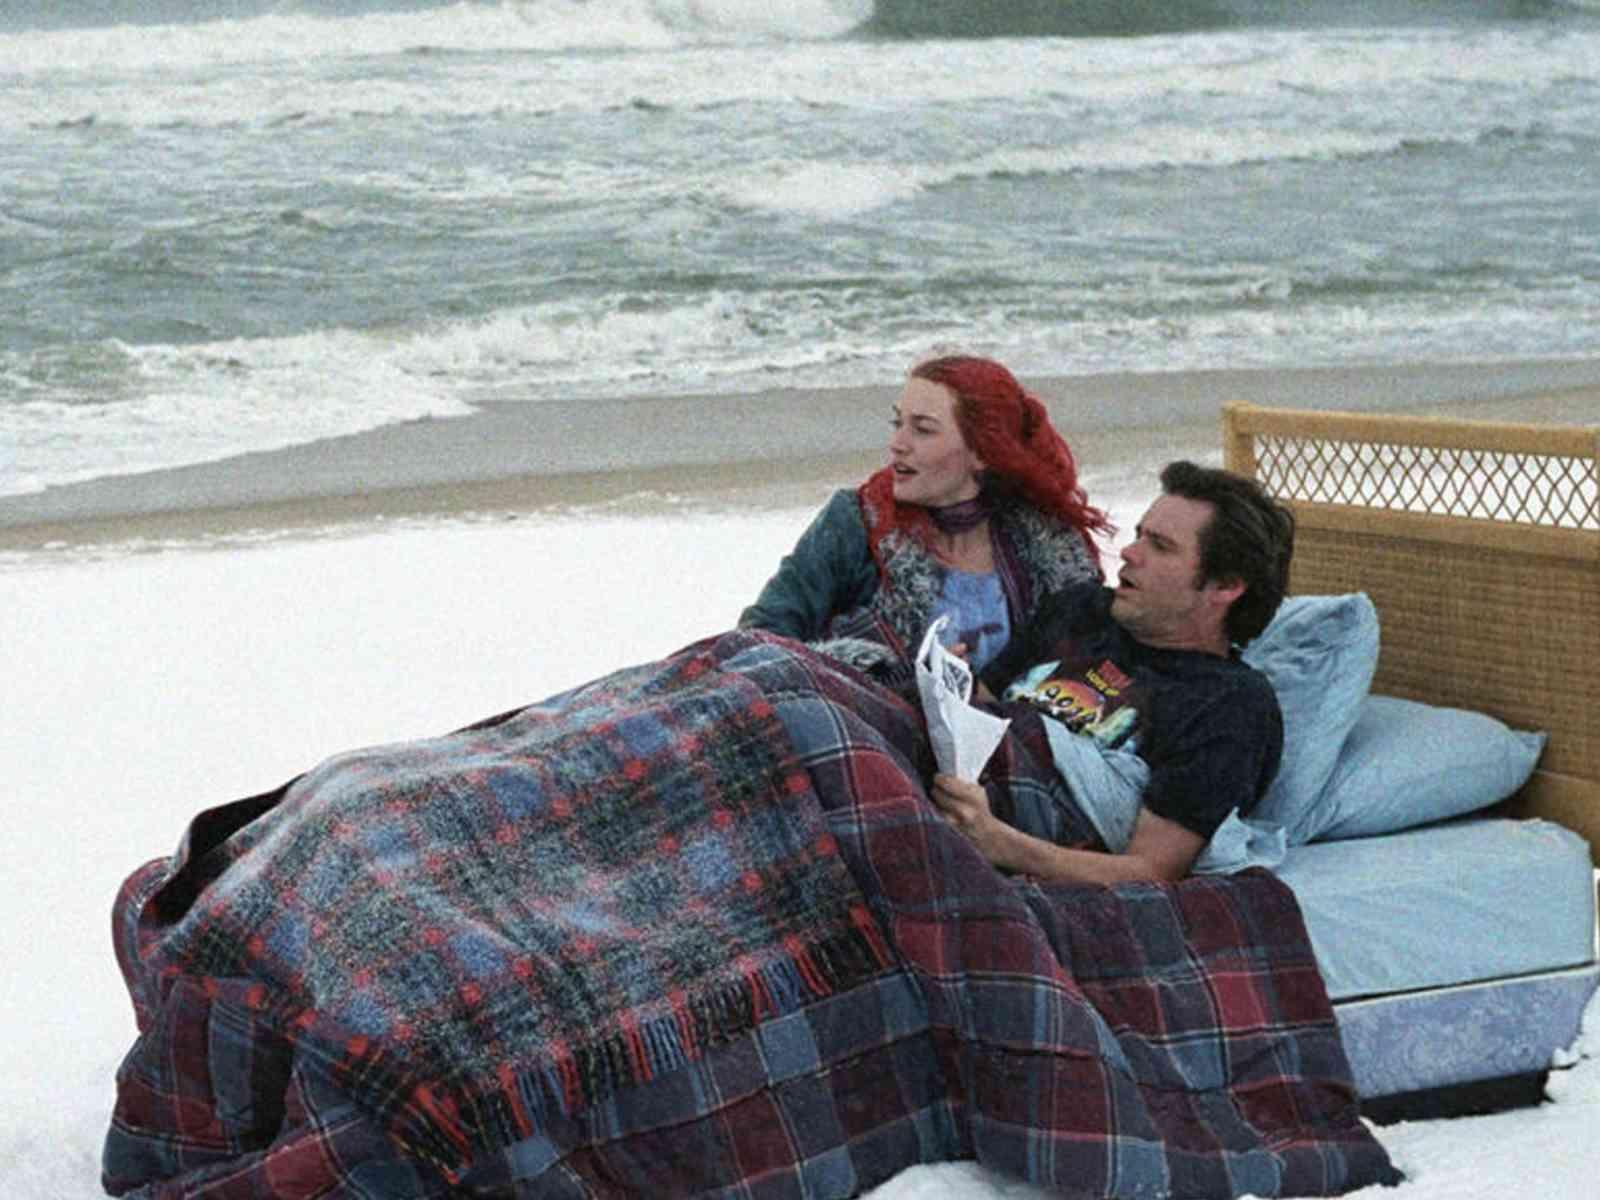 Zwei Personen im Bett am Strand